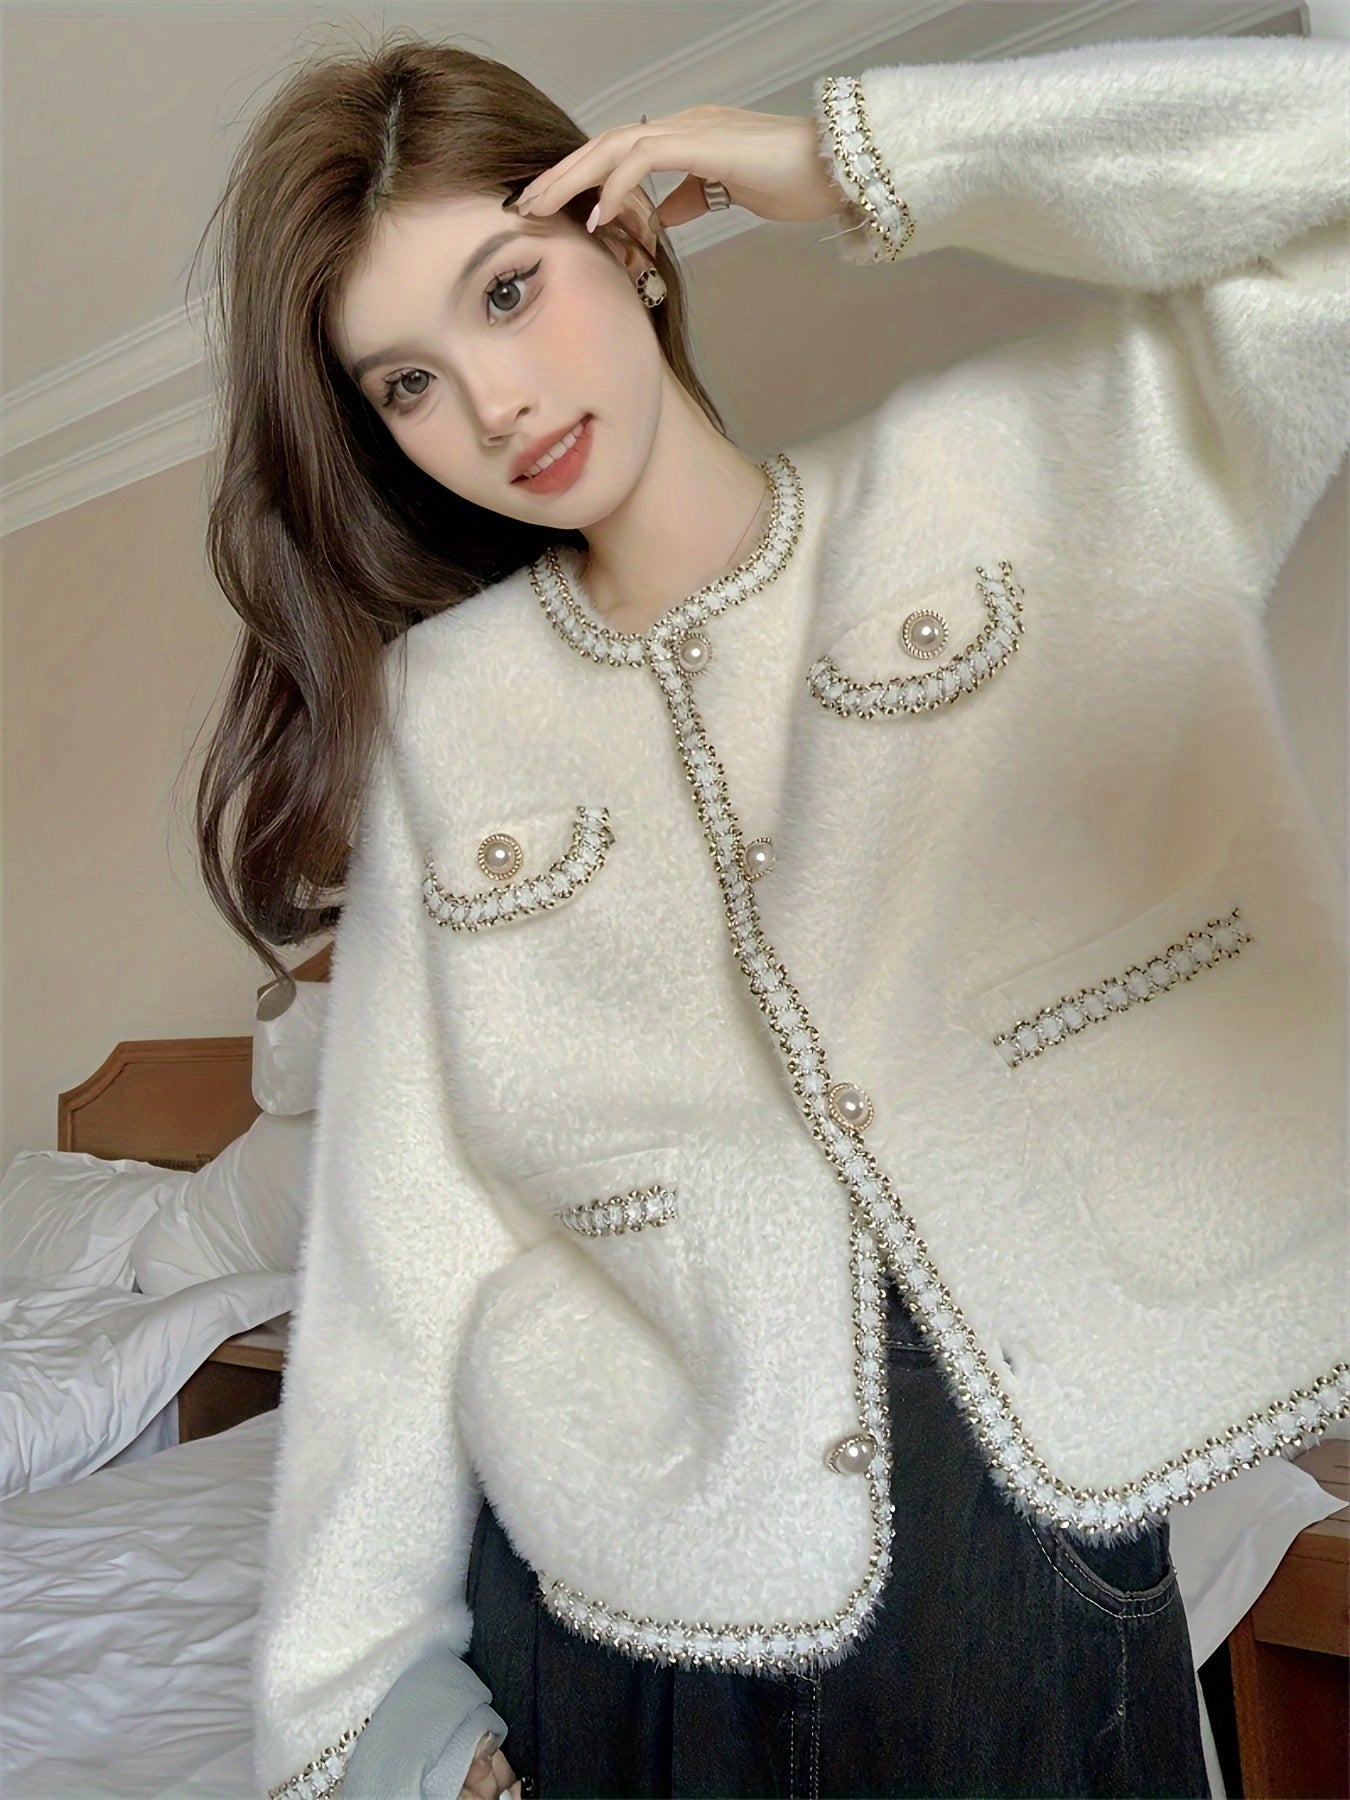 Vzyzv Contrast Trim Button Down Knit Cardigan, Elegant Long Sleeve Cozy Sweater, Women's Clothing